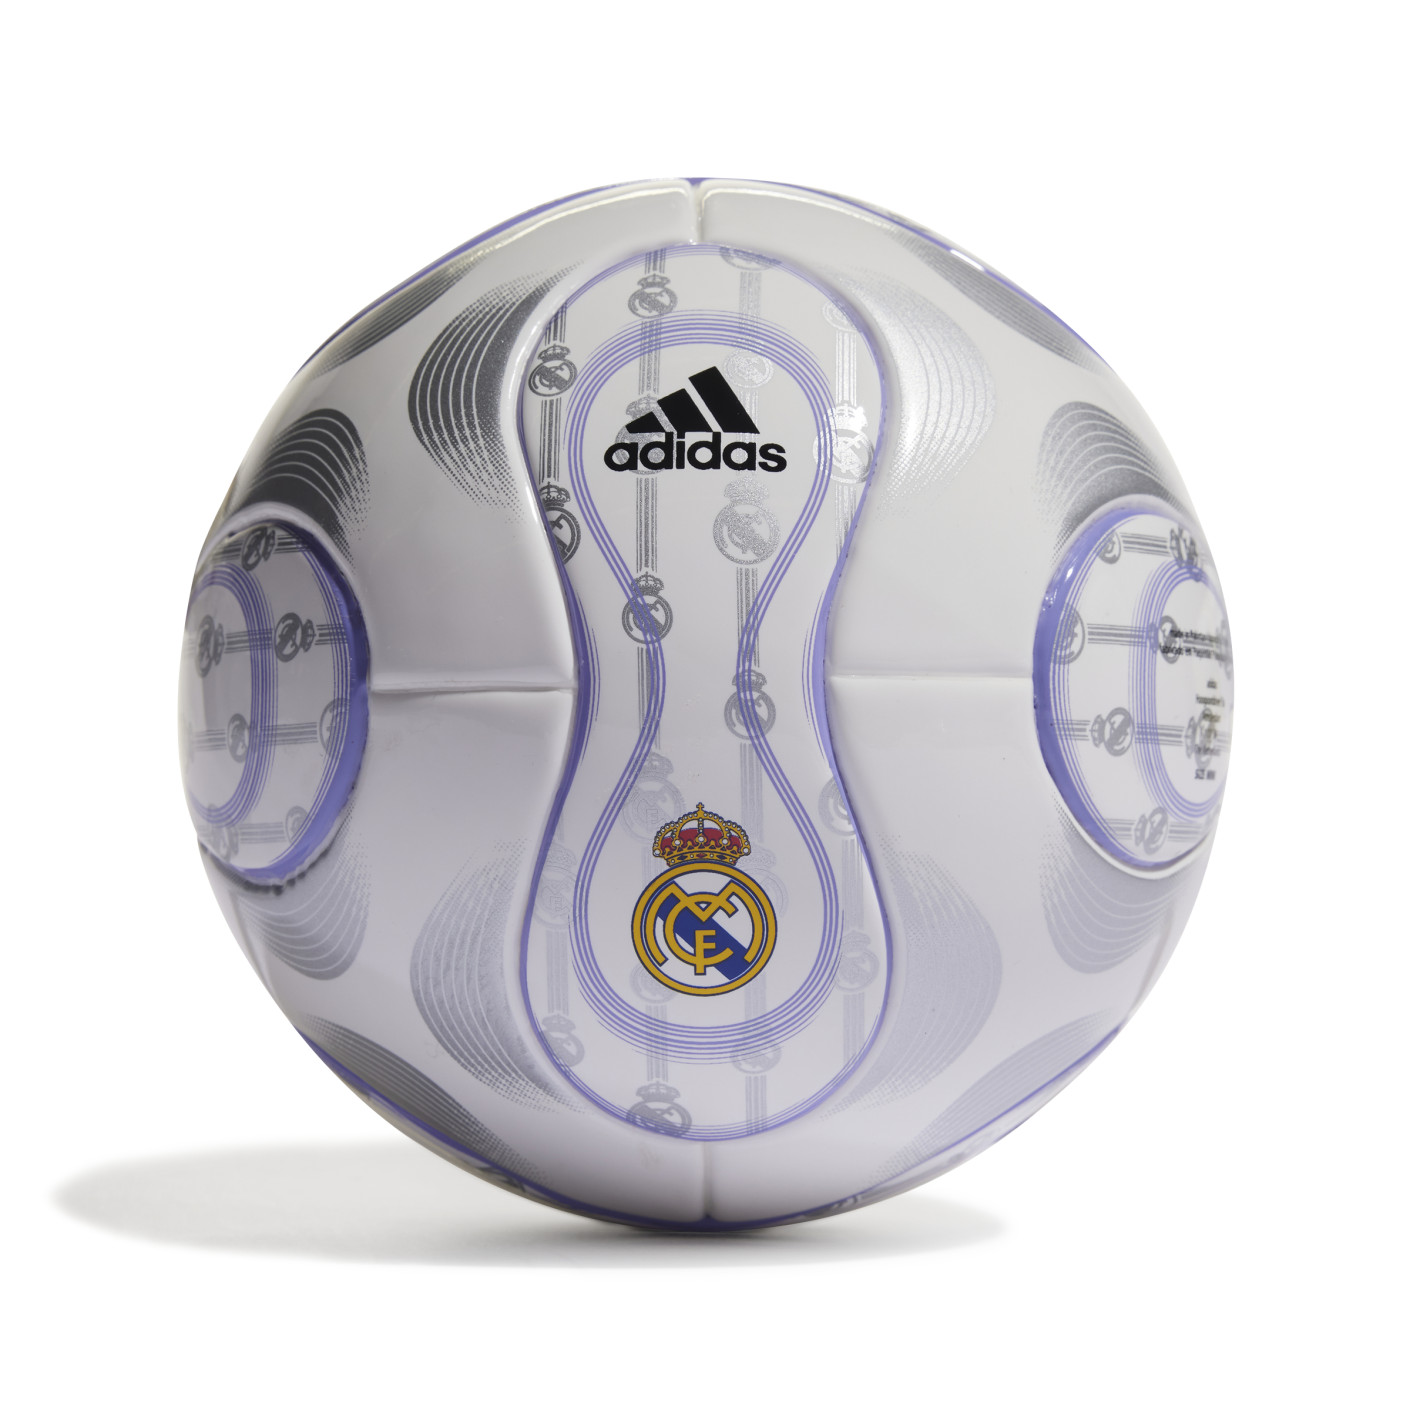 Mini-ballon de football Adidas Real Madrid blanc argenté violet